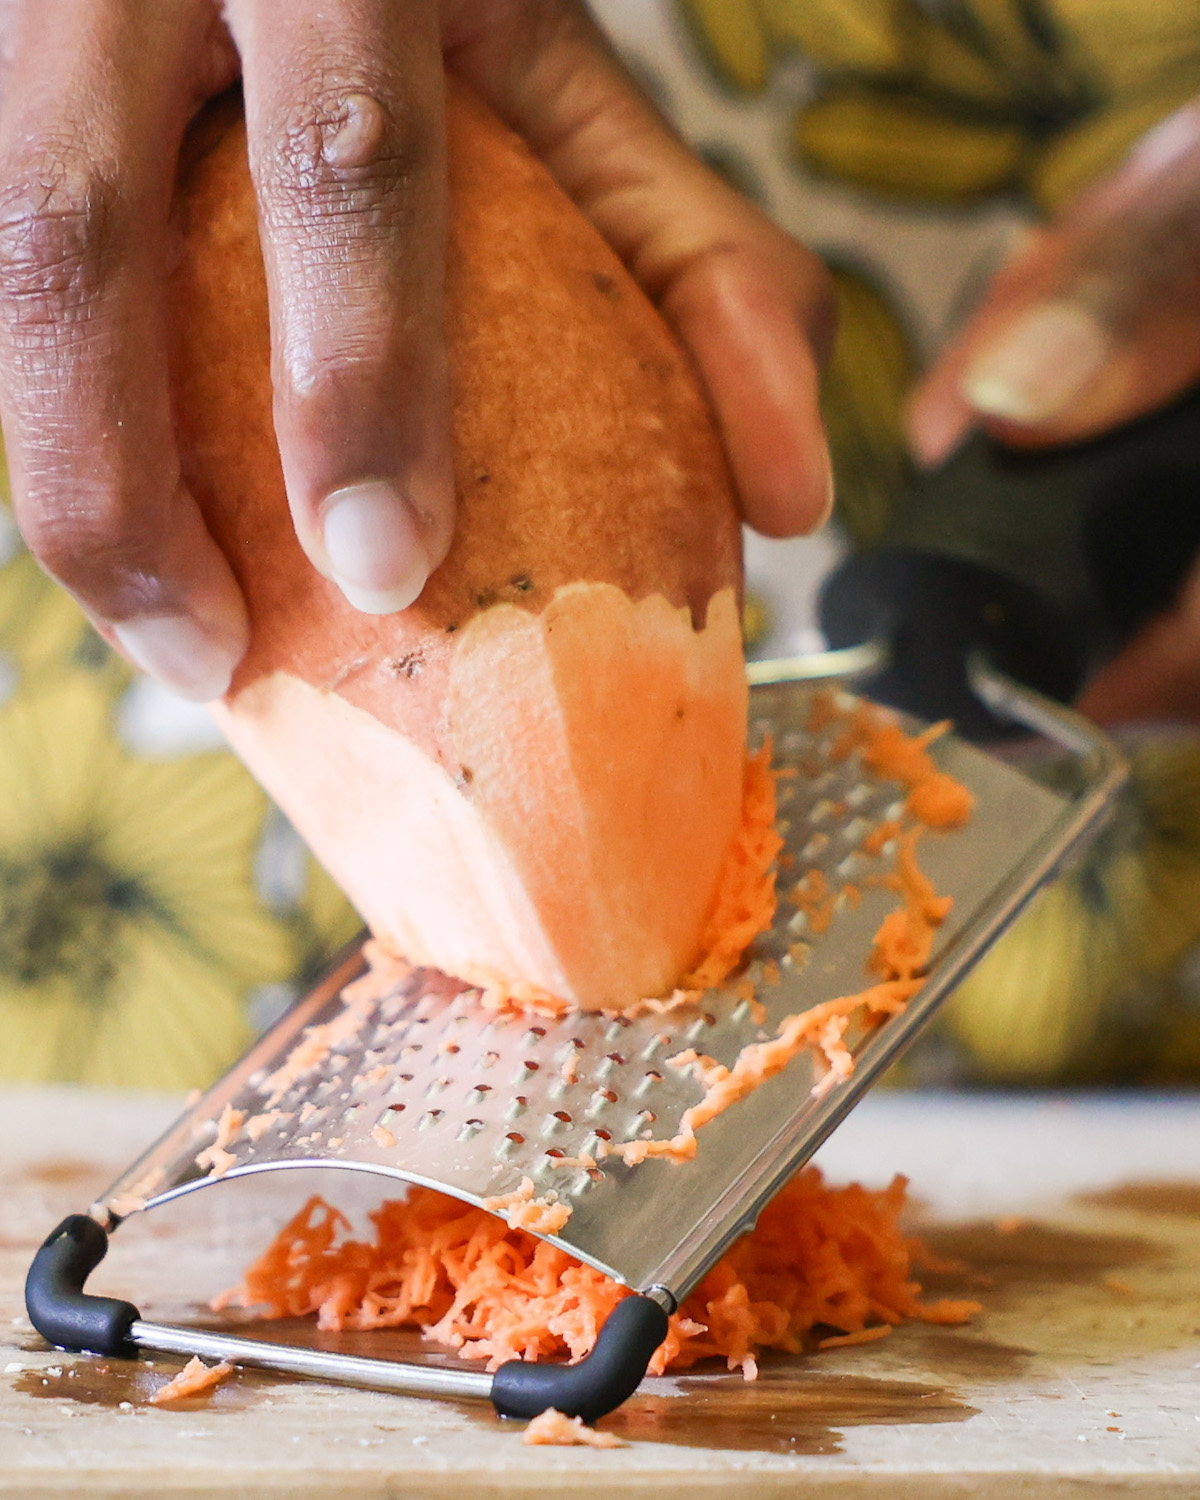 An up-close shot of a brown hand shredding a sweet potato on a cutting board.